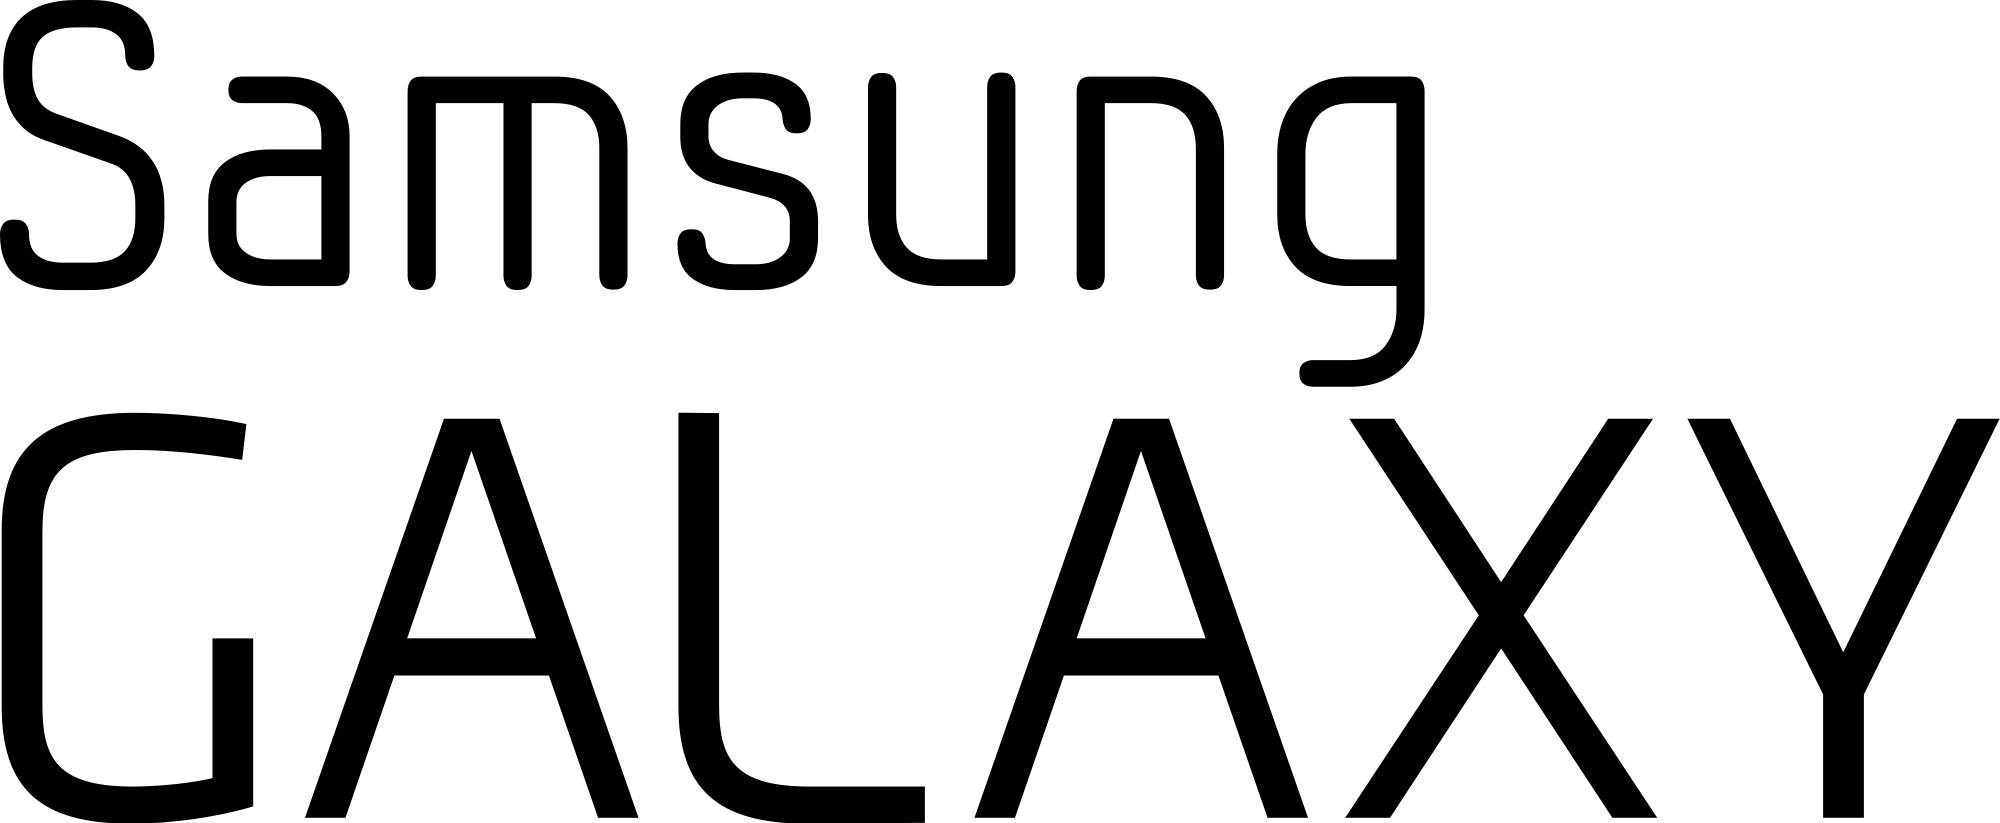 Samsung Galaxy Logo - Samsung Galaxy wordmark.svg